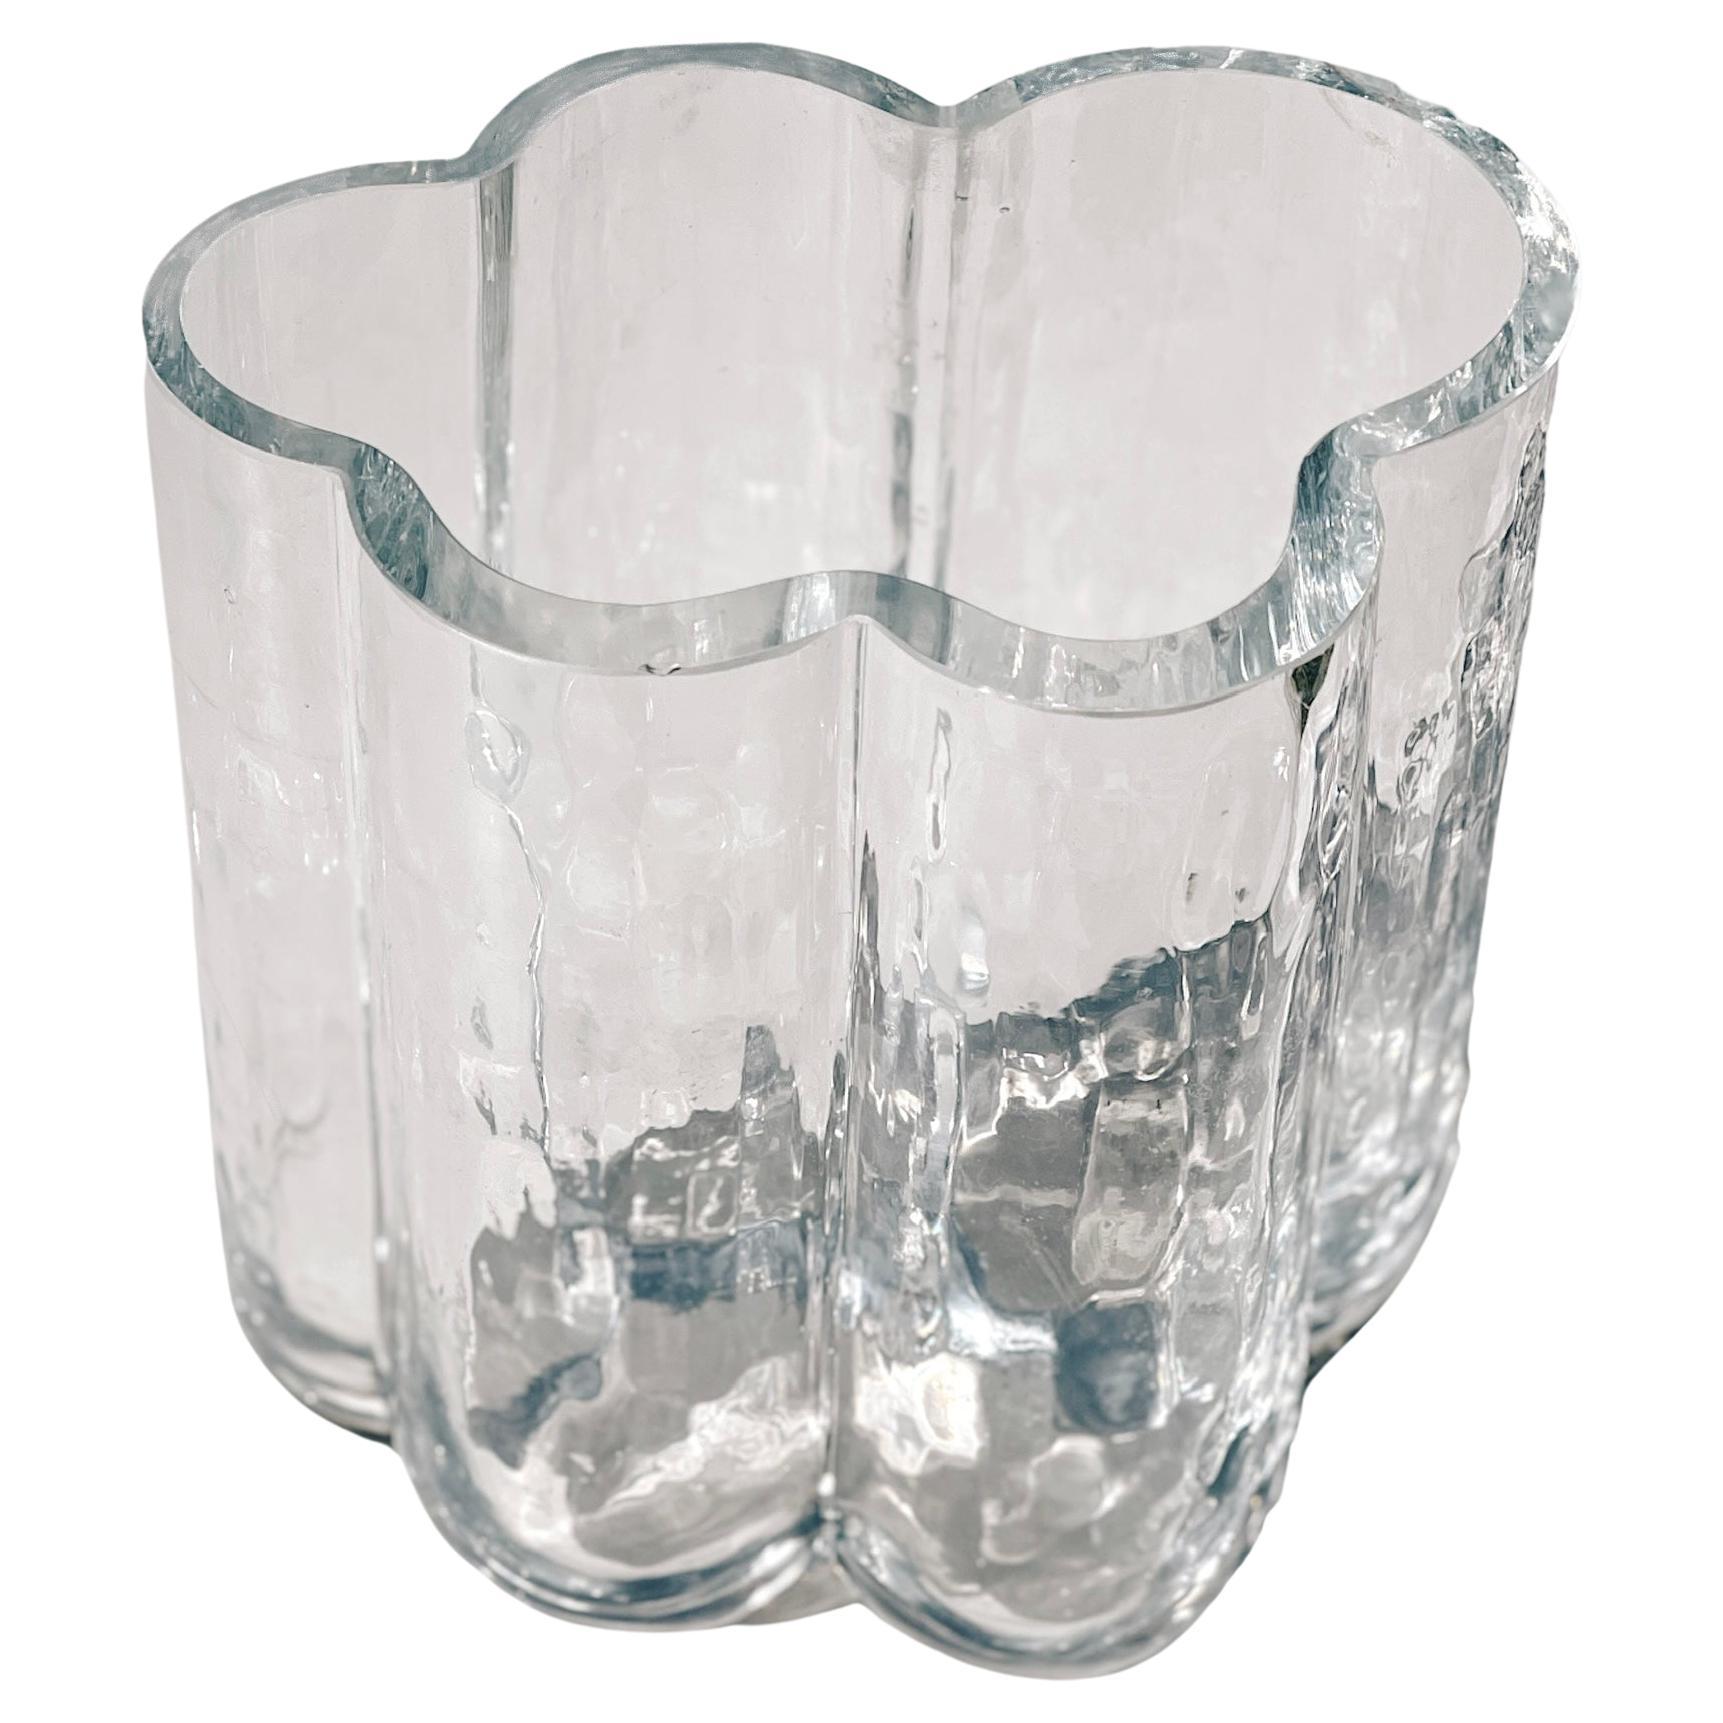 Scandinavian Modern Crystal Cloud Vase, c. 1970s Free-Form Studio Glass For Sale